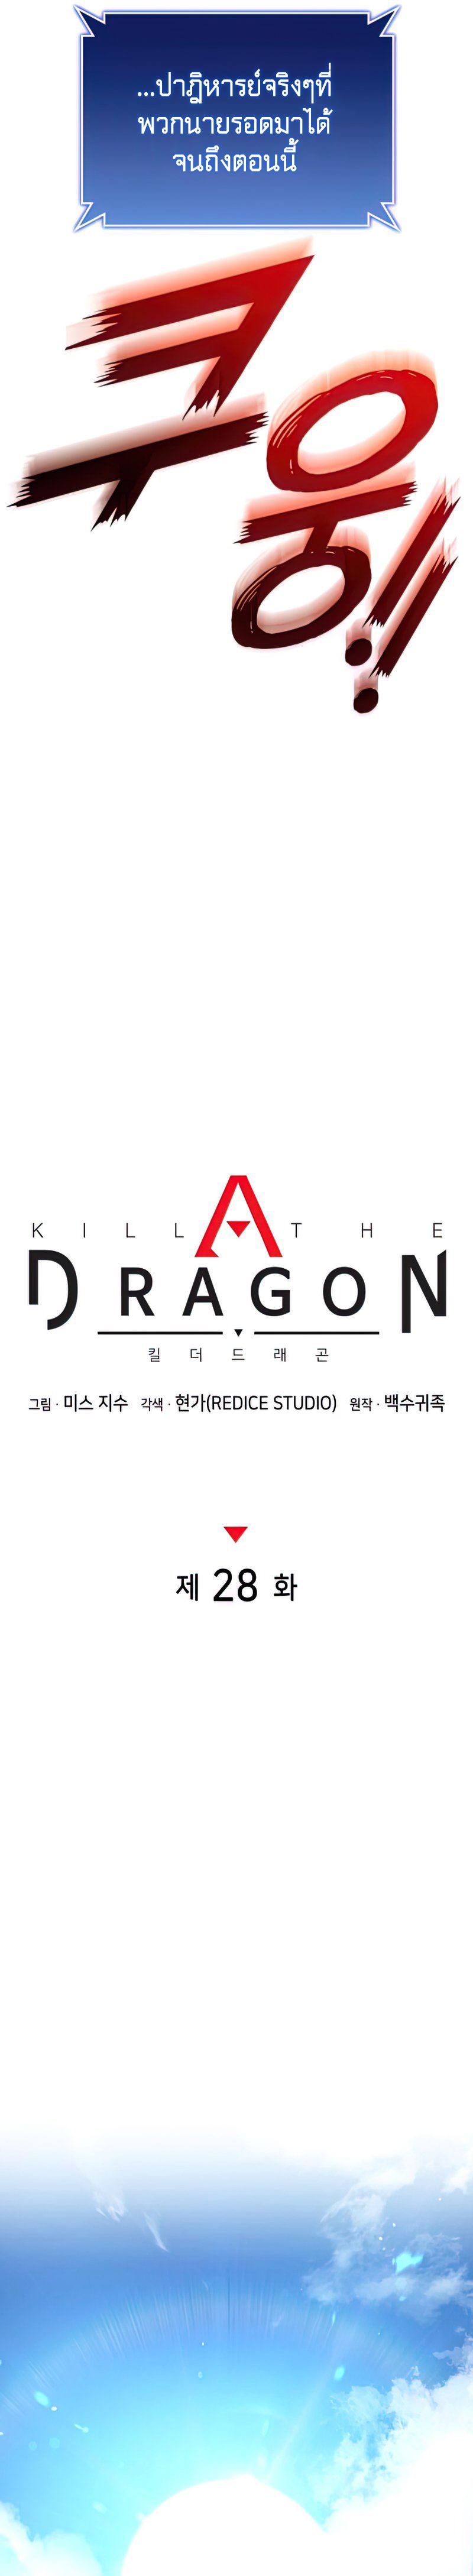 Kill the Dragon28 11